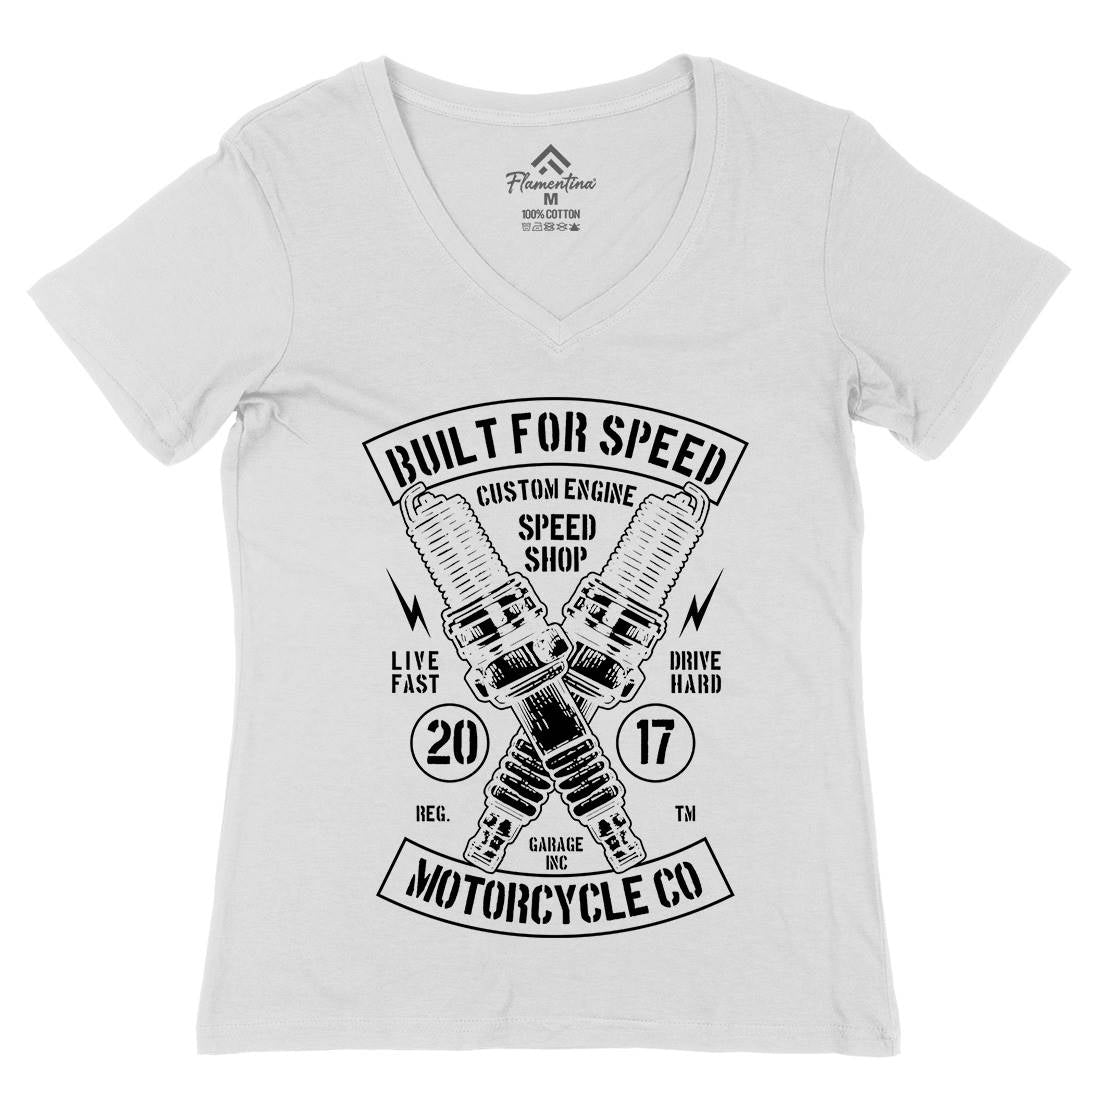 Built For Speed Womens Organic V-Neck T-Shirt Motorcycles B188